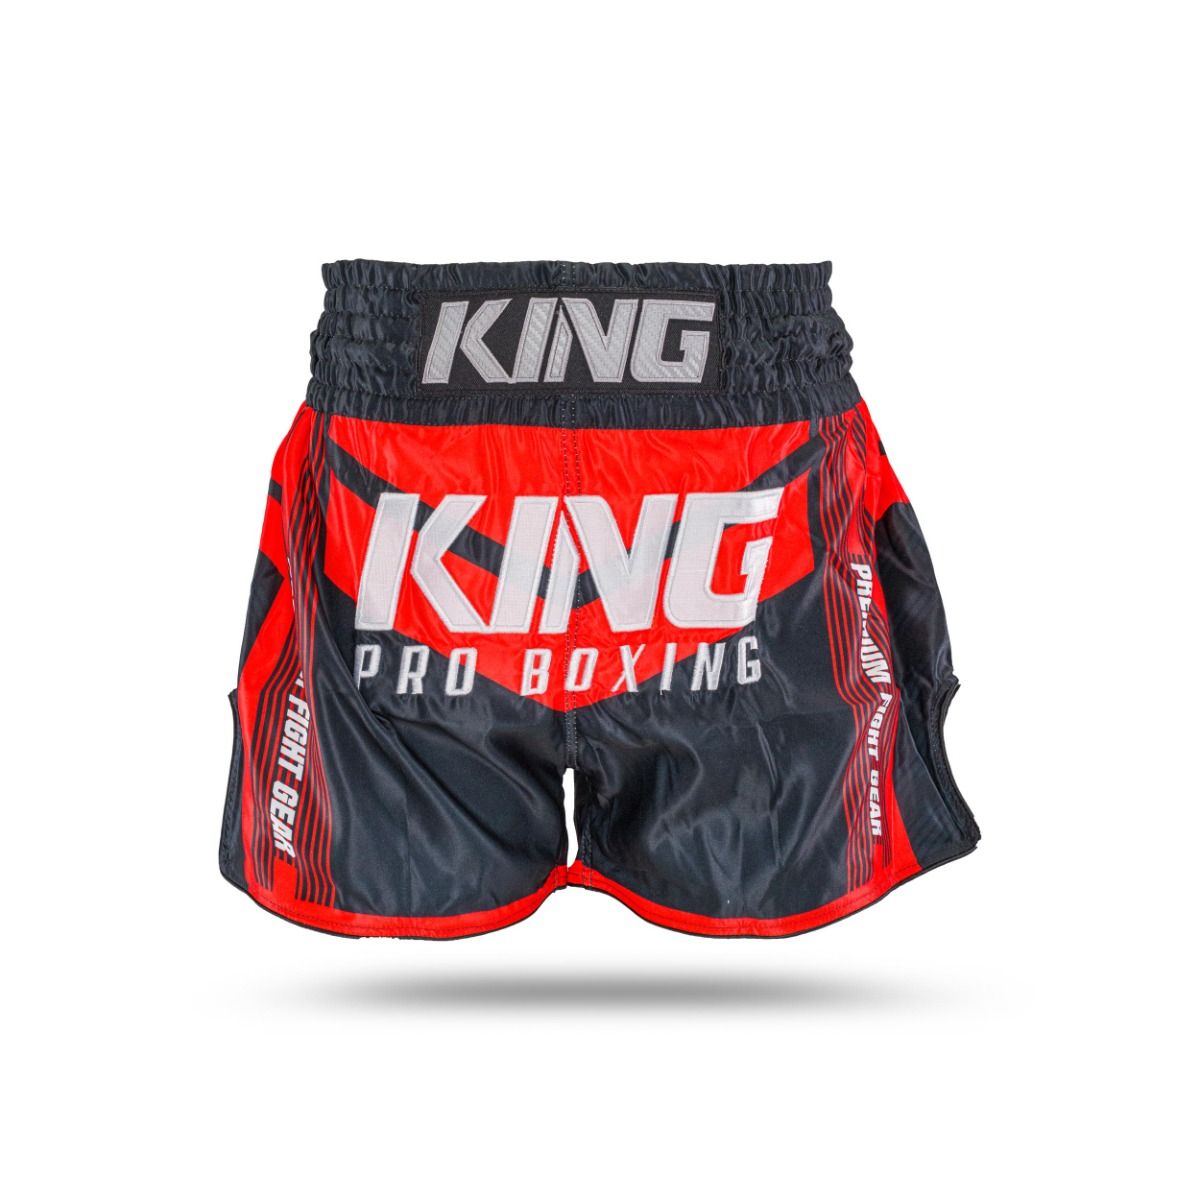 King endurance kick boksbroek rood - Booster Fight Store